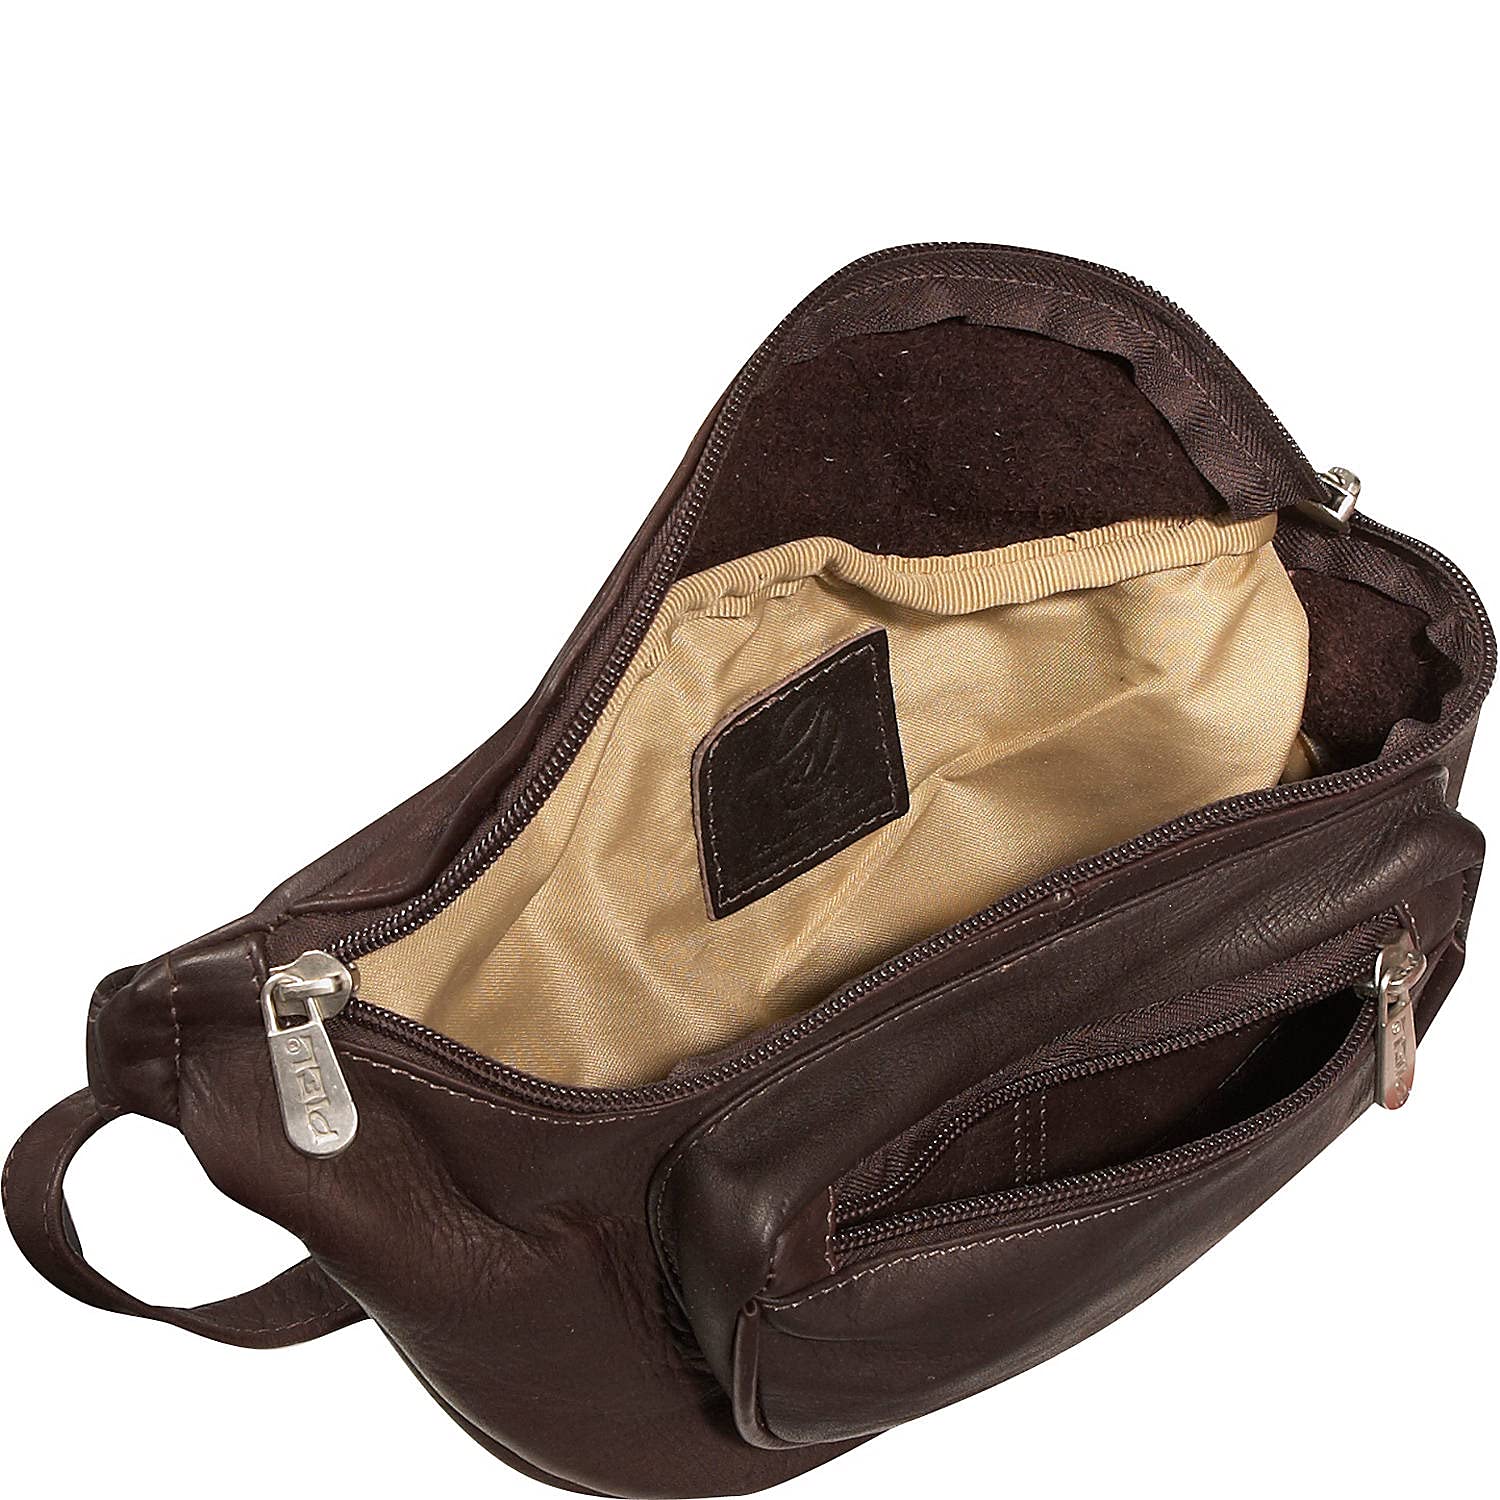 Piel Leather Travelers Waist Bag, Chocolate, One Size